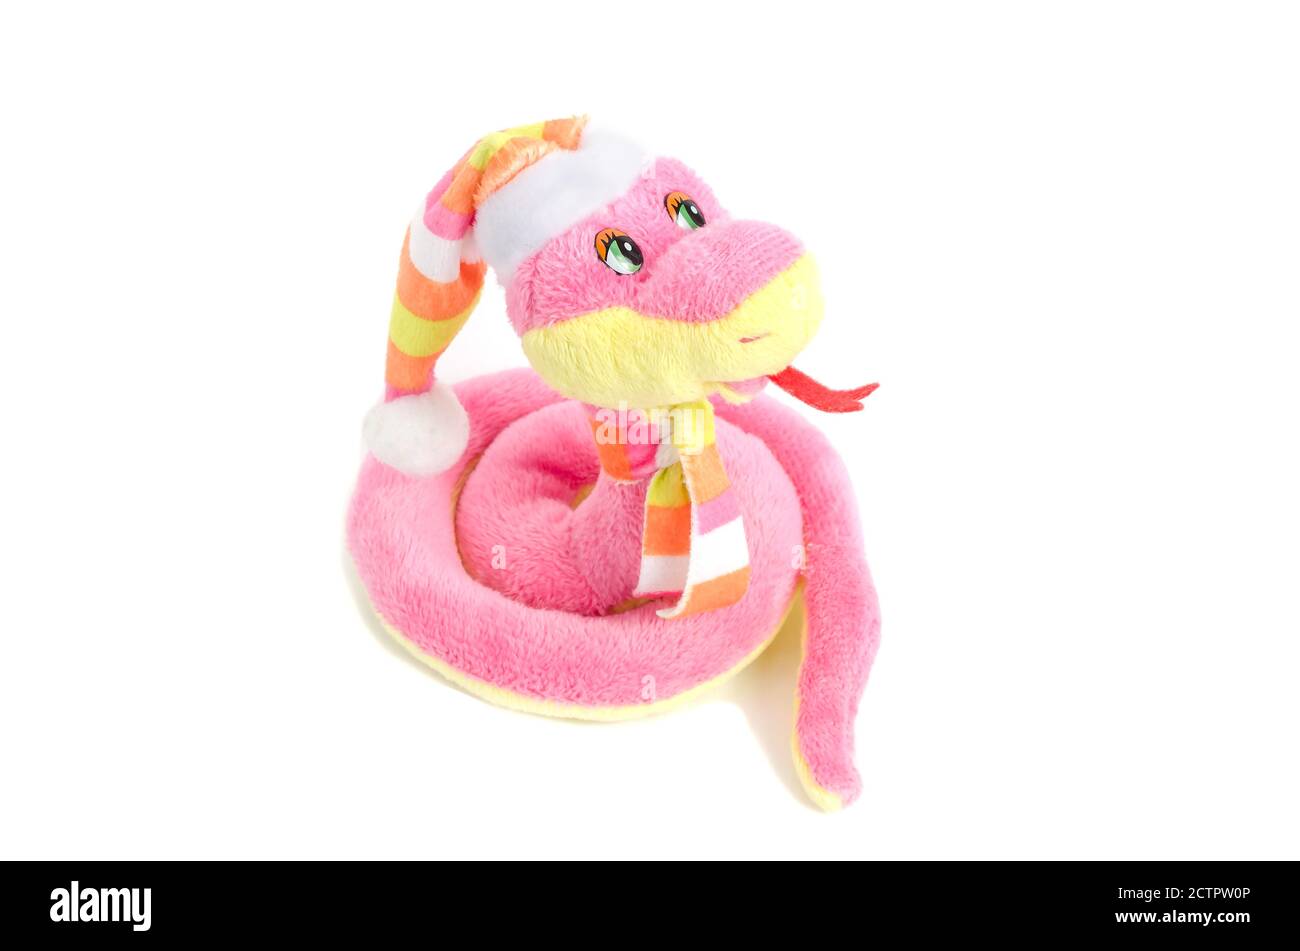 Peluche suave juguete rosa serpiente aislada sobre fondo blanco Foto de stock